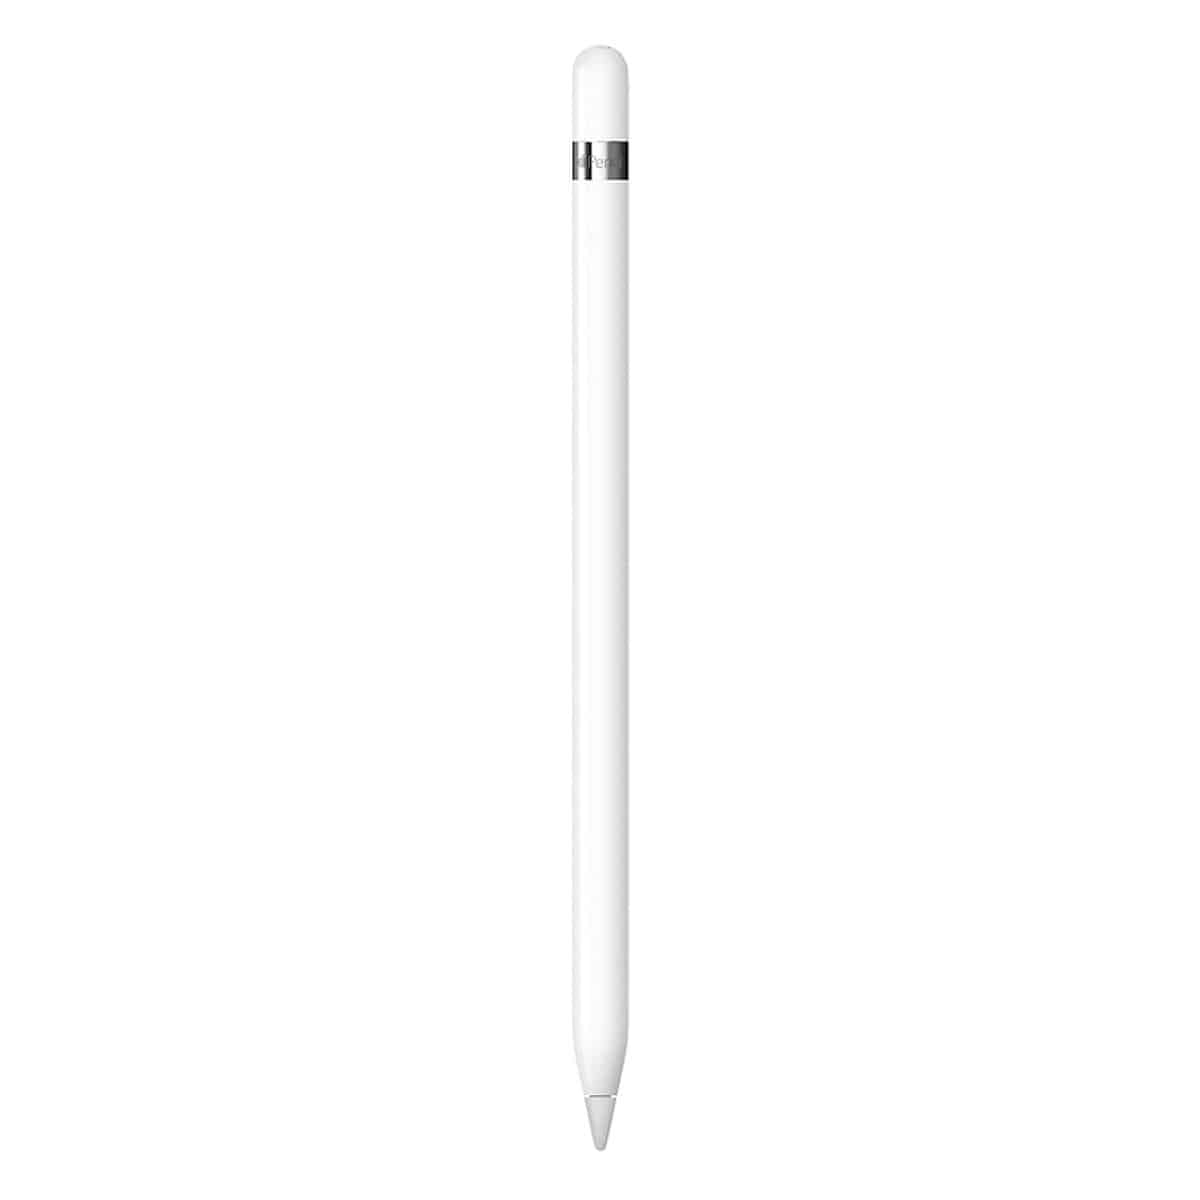 MK0C2ZP A - Apple Pencil Chính hãng VN A